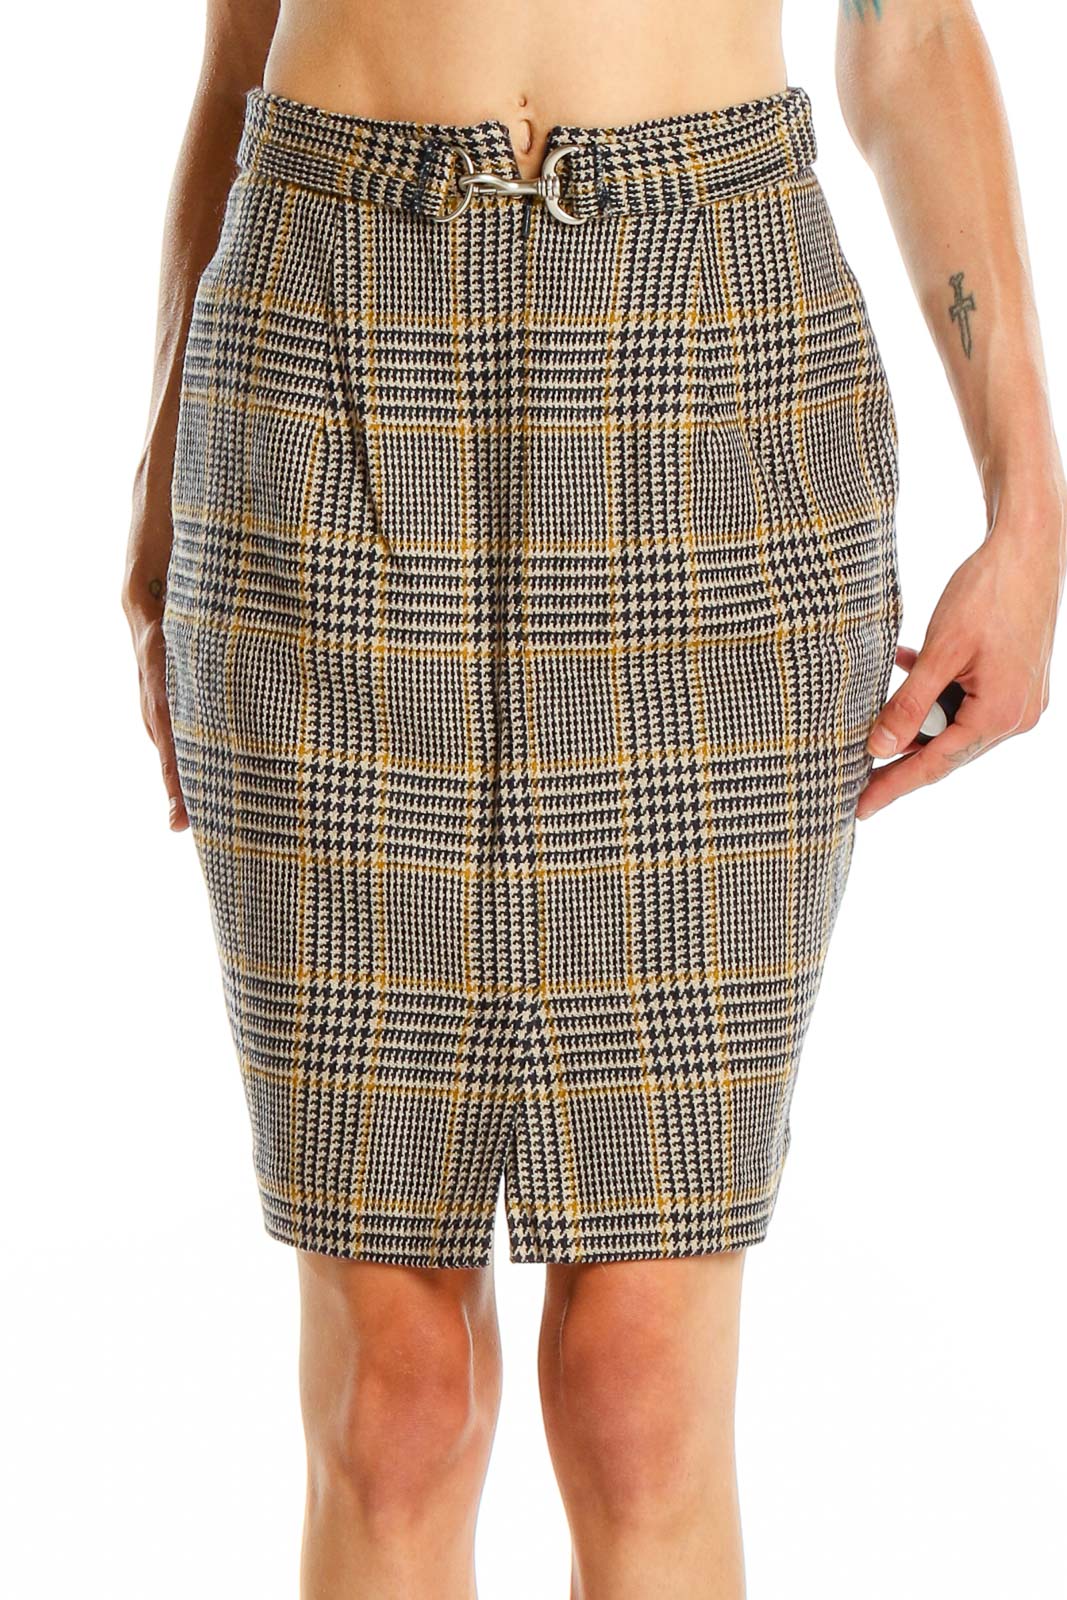 Gray Retro Plaid Pencil Skirt Front